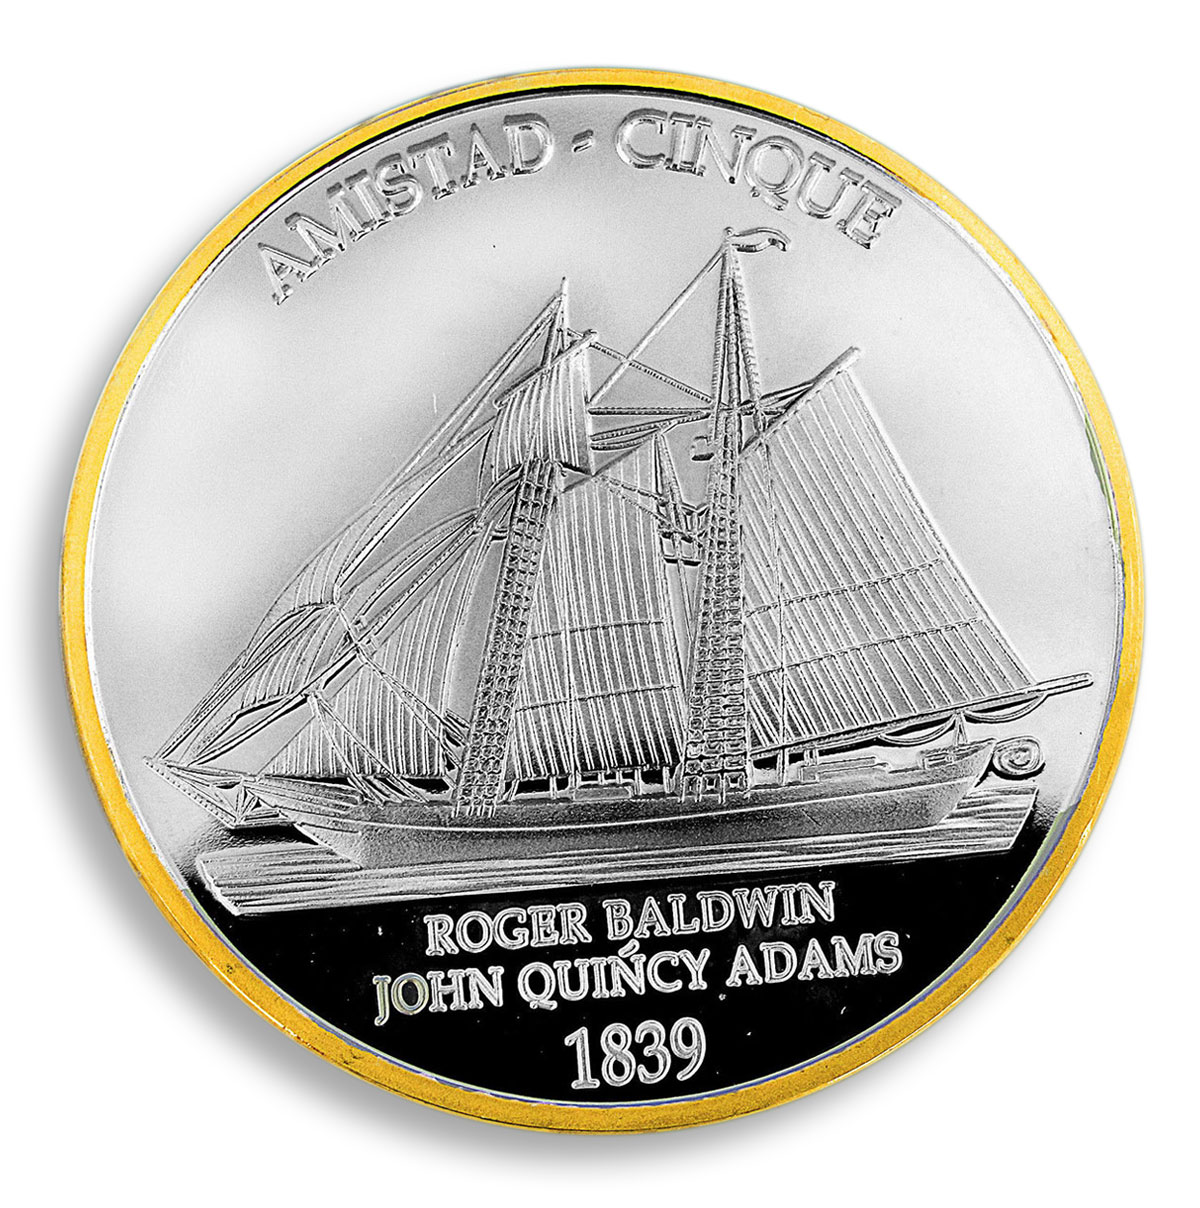 Ship, Amistad Cinque, Roger Baldwin, John Quincy Adams, 1839, Silver Gold Plated